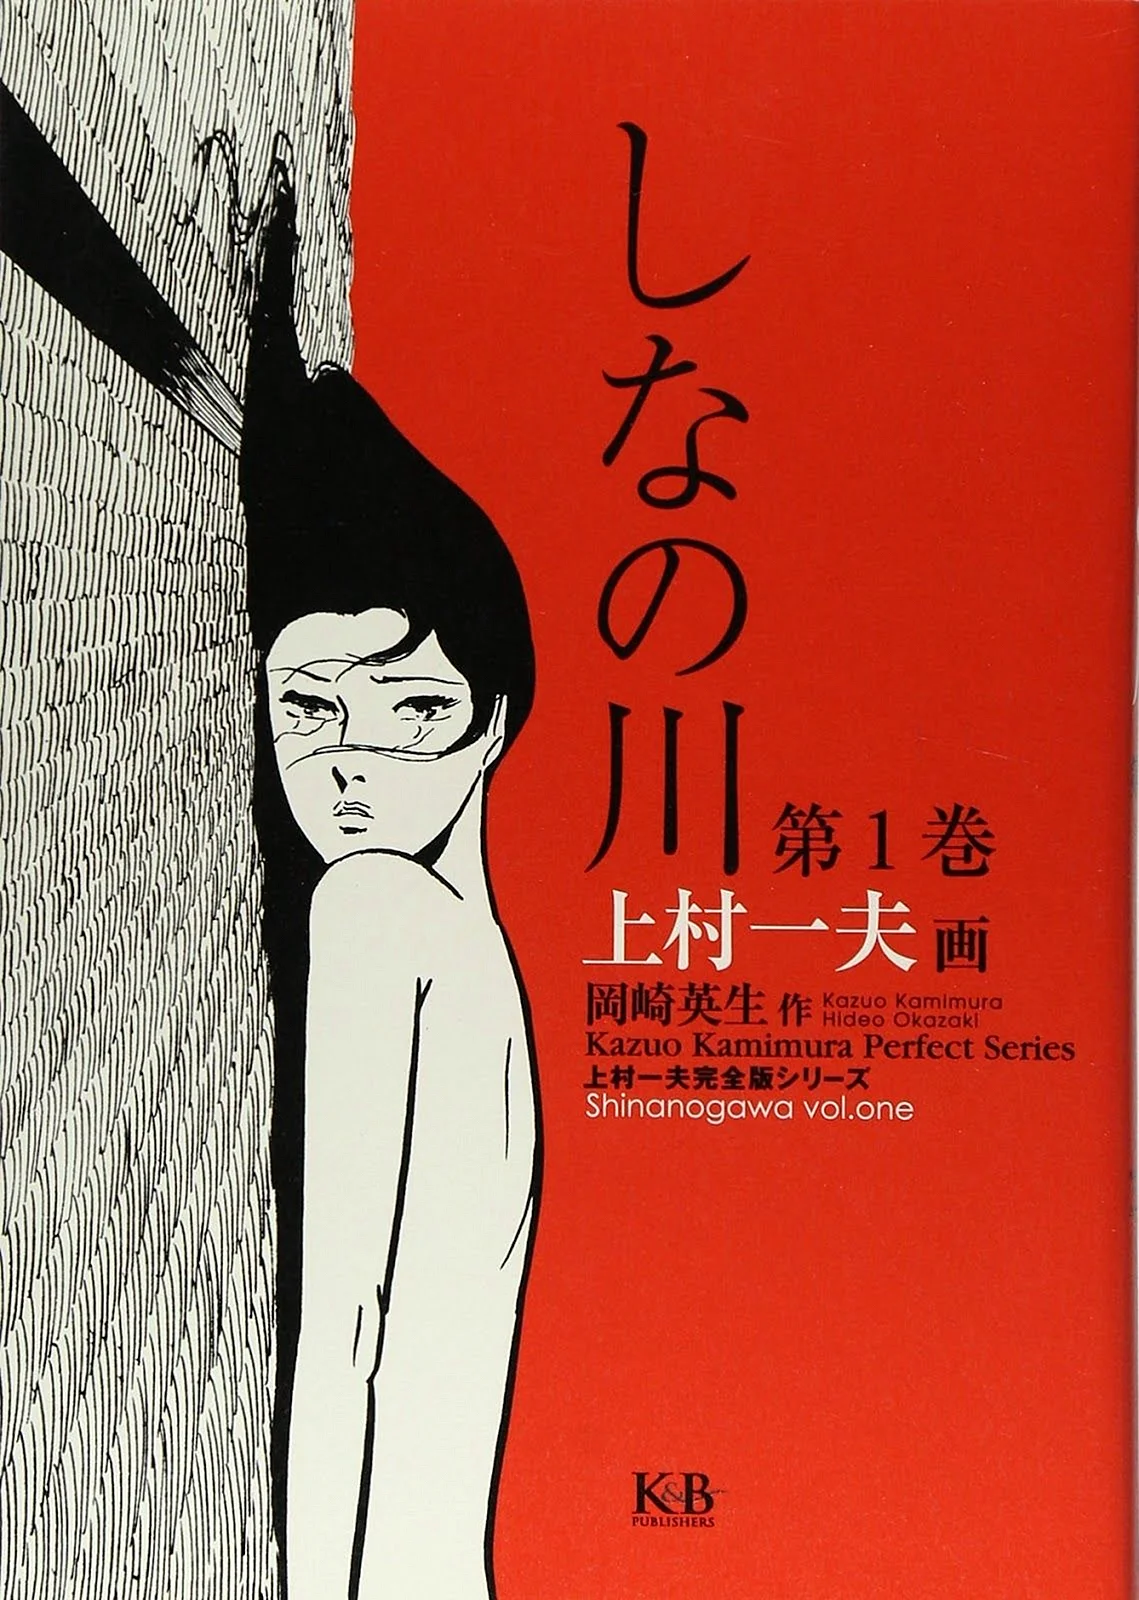 Японский плакат дизайн